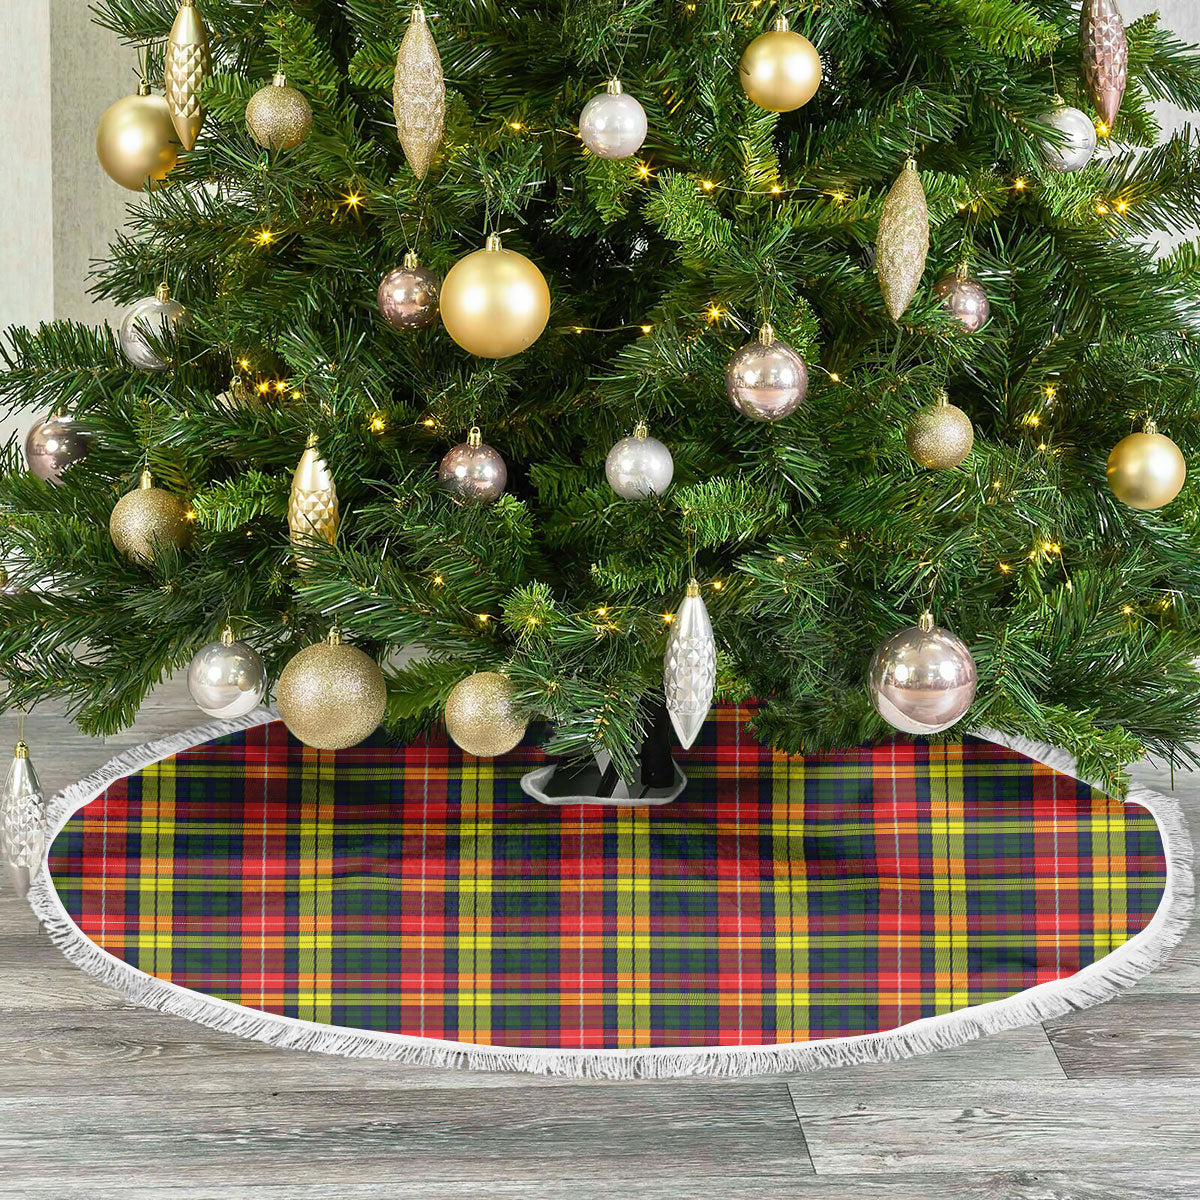 Dewar Tartan Christmas Tree Skirt